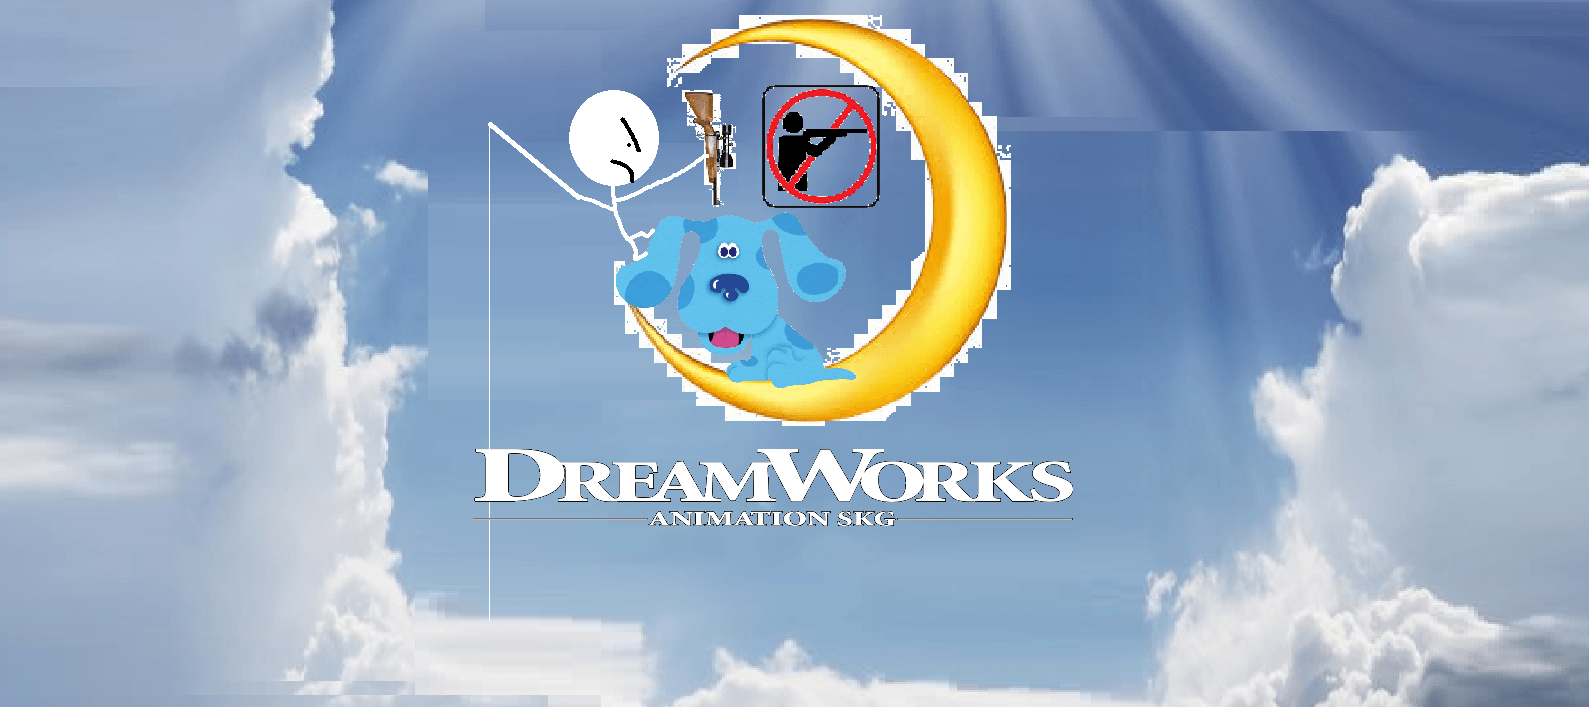 DreamWorks Animation Logo - Image - DreamWorks Animation logo (Blue's Clues).png | The Idea Wiki ...